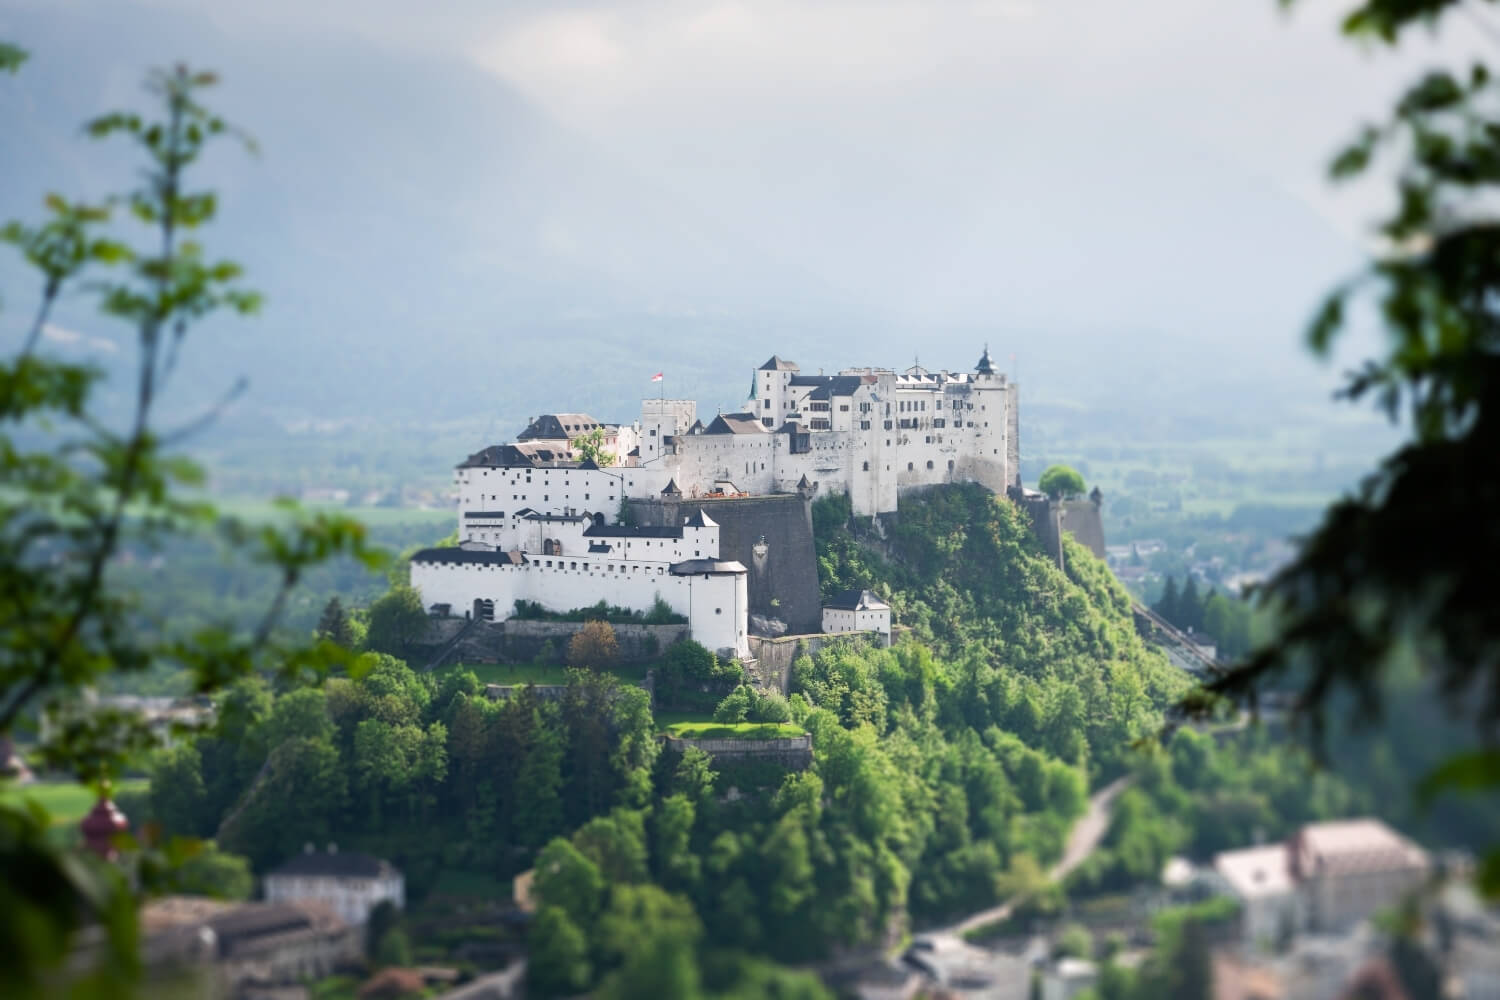 Hohensalzburg Castle sitting high above Salzburg